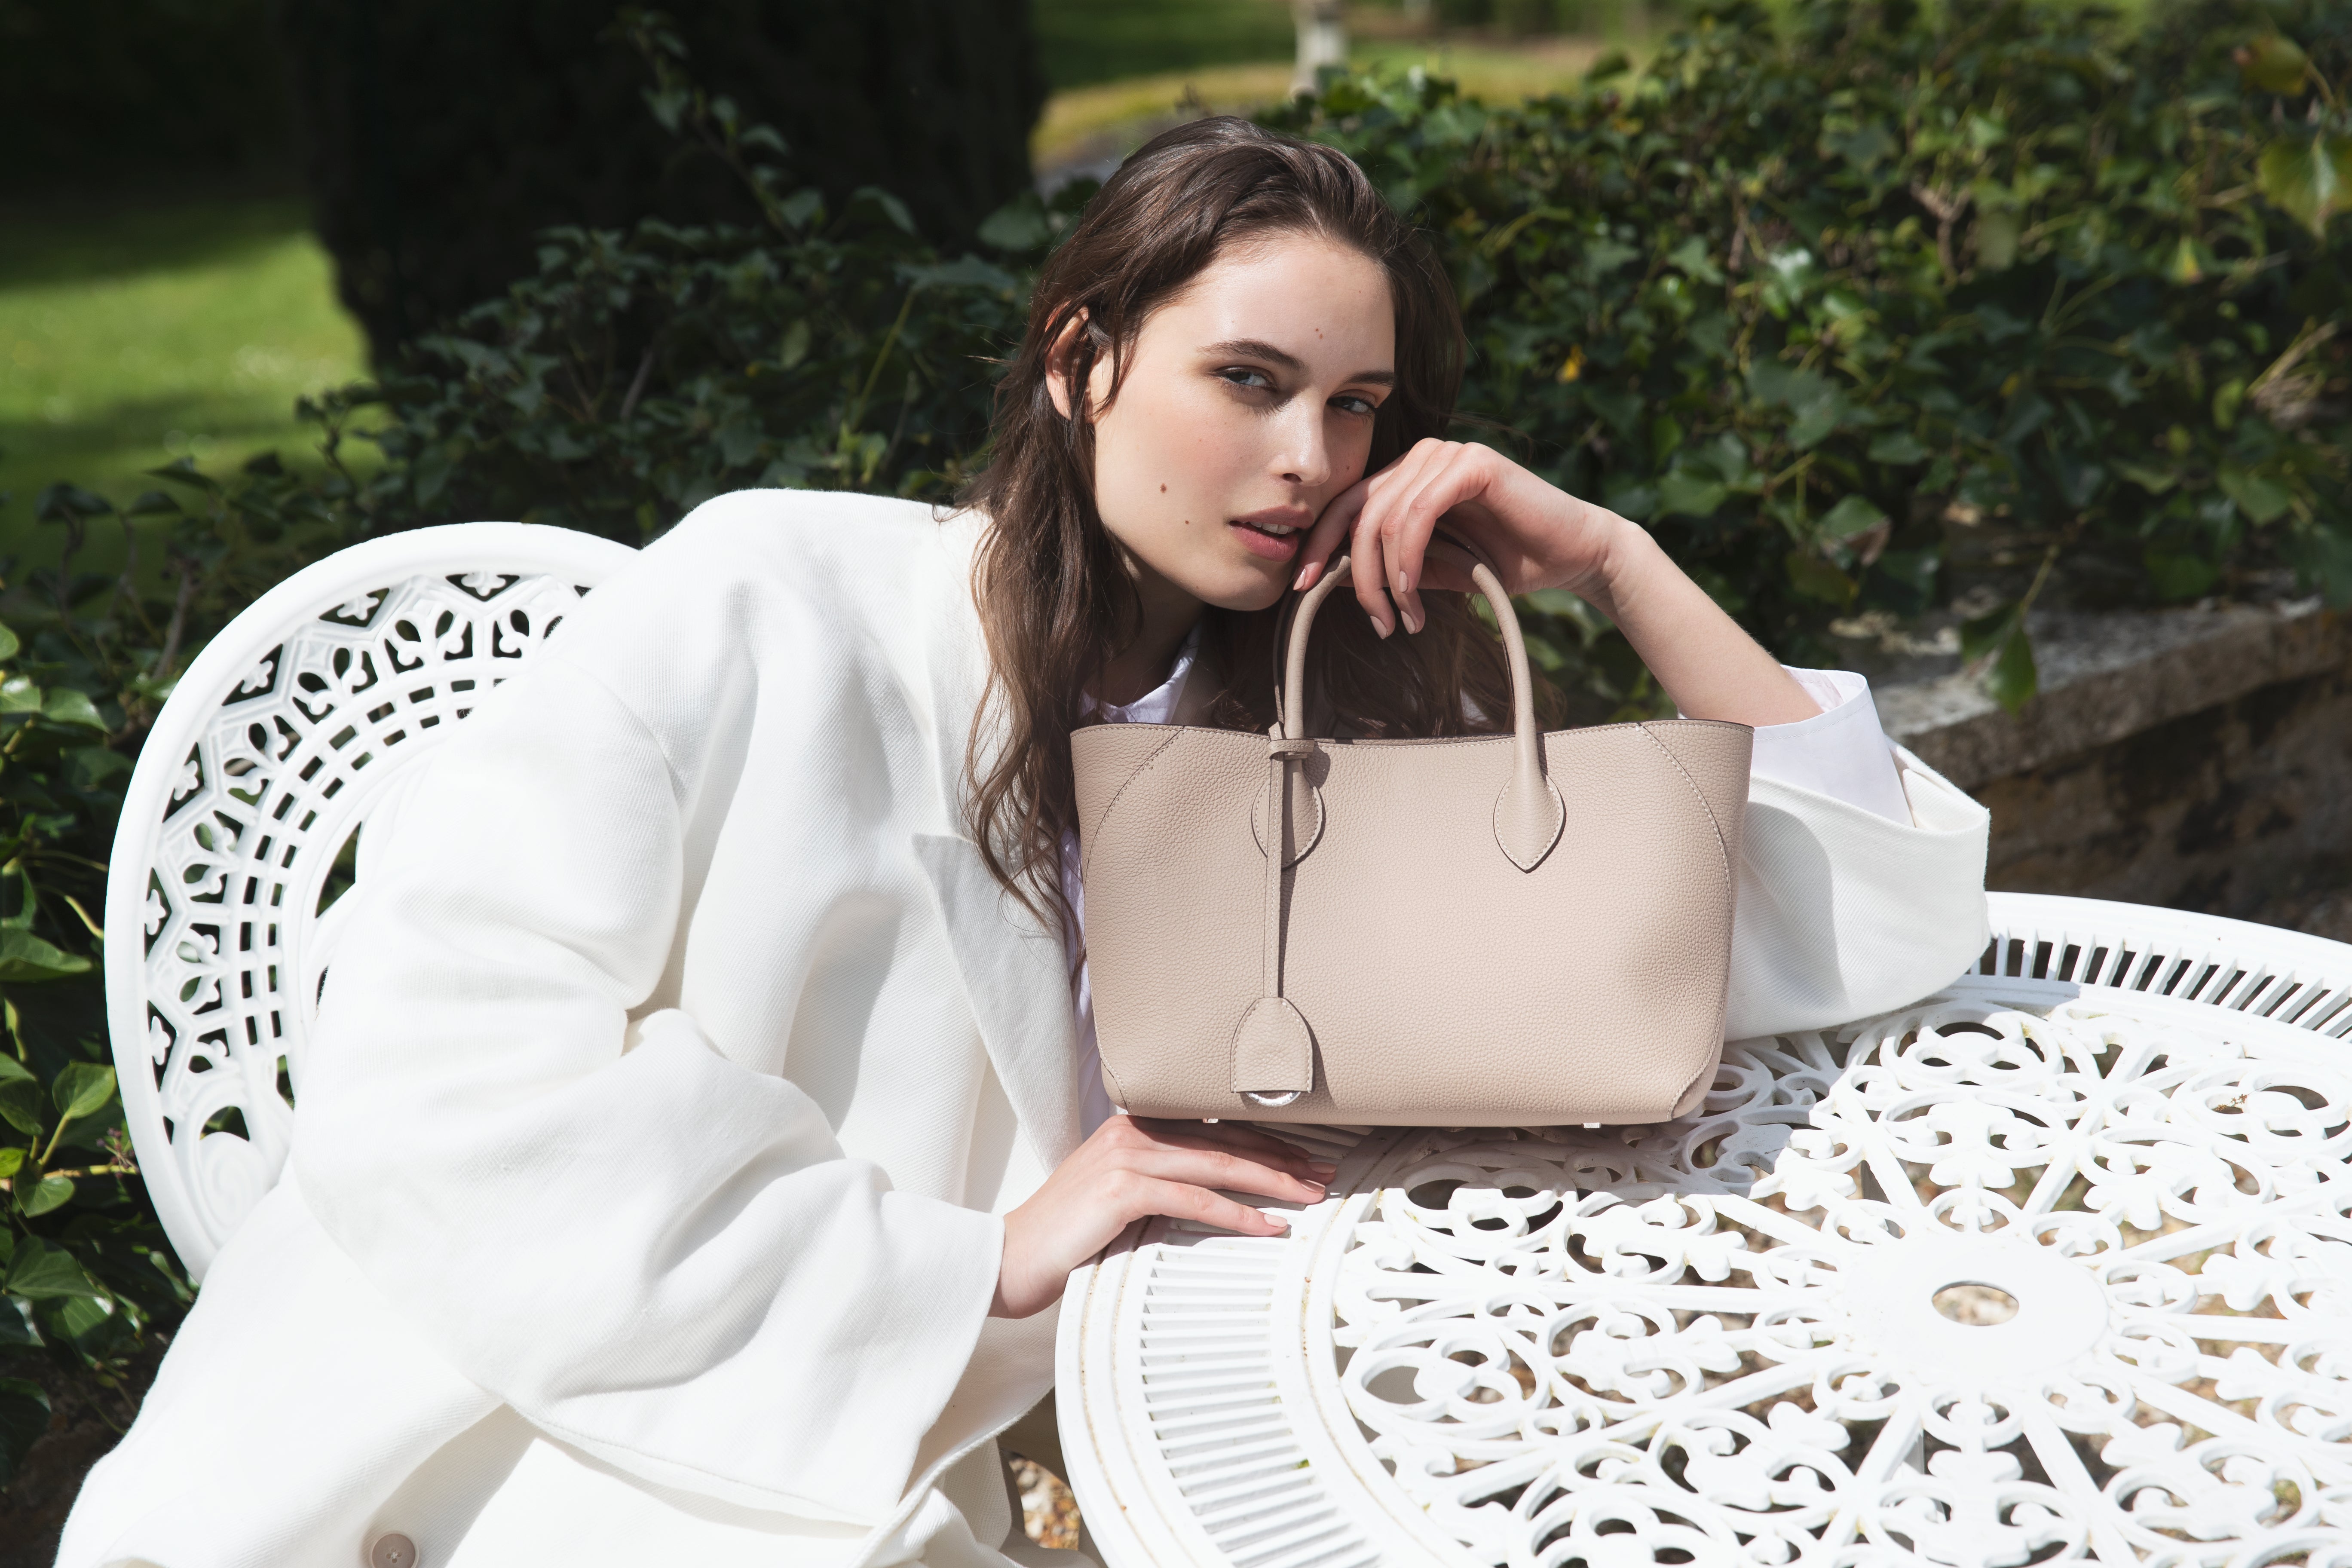 Elegant minimalist handbag in beige, perfect for wedding outfits.